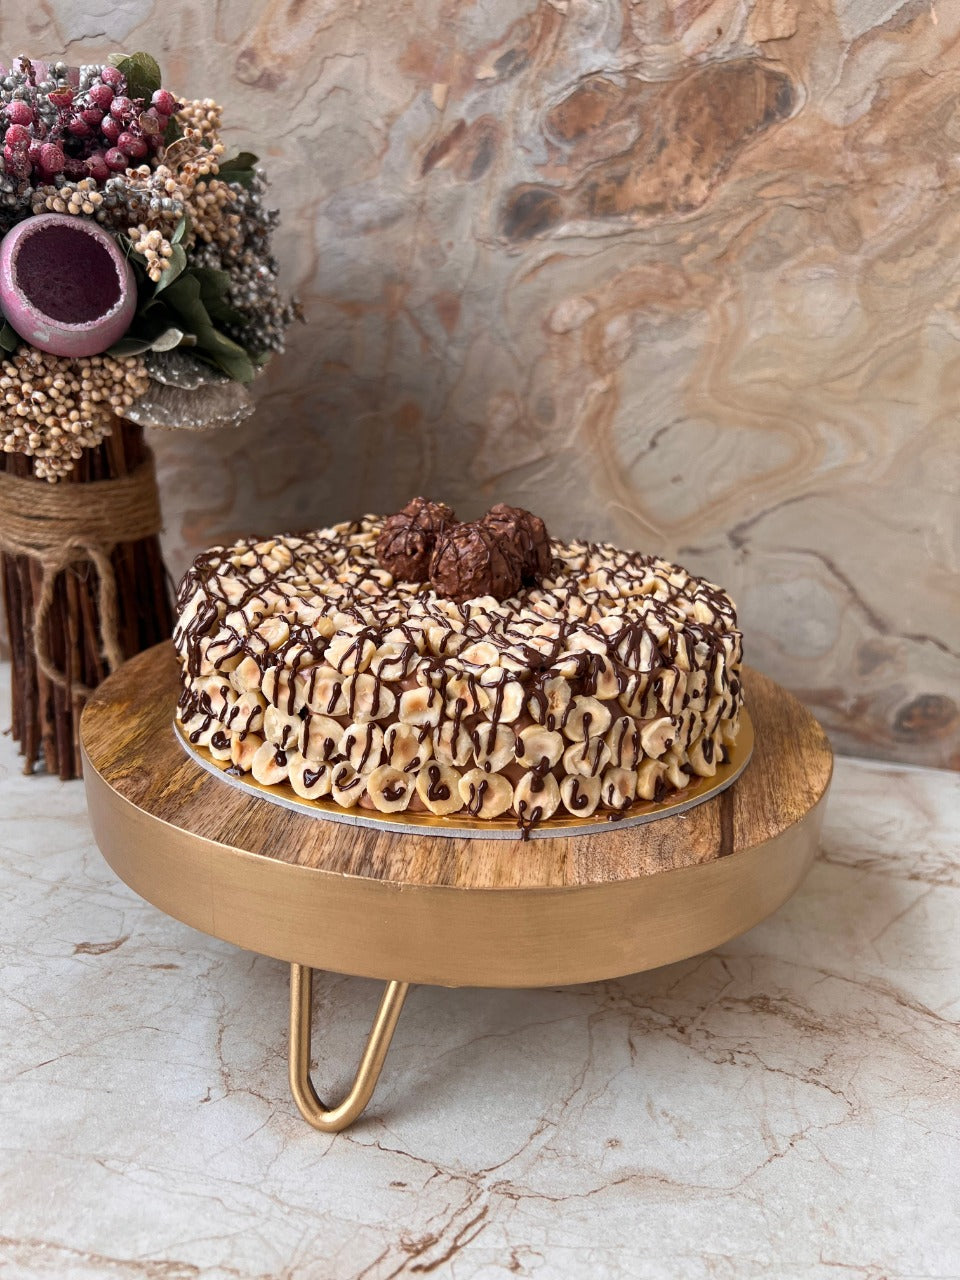 Ferrero Rocher Cake - Little Sugar Snaps